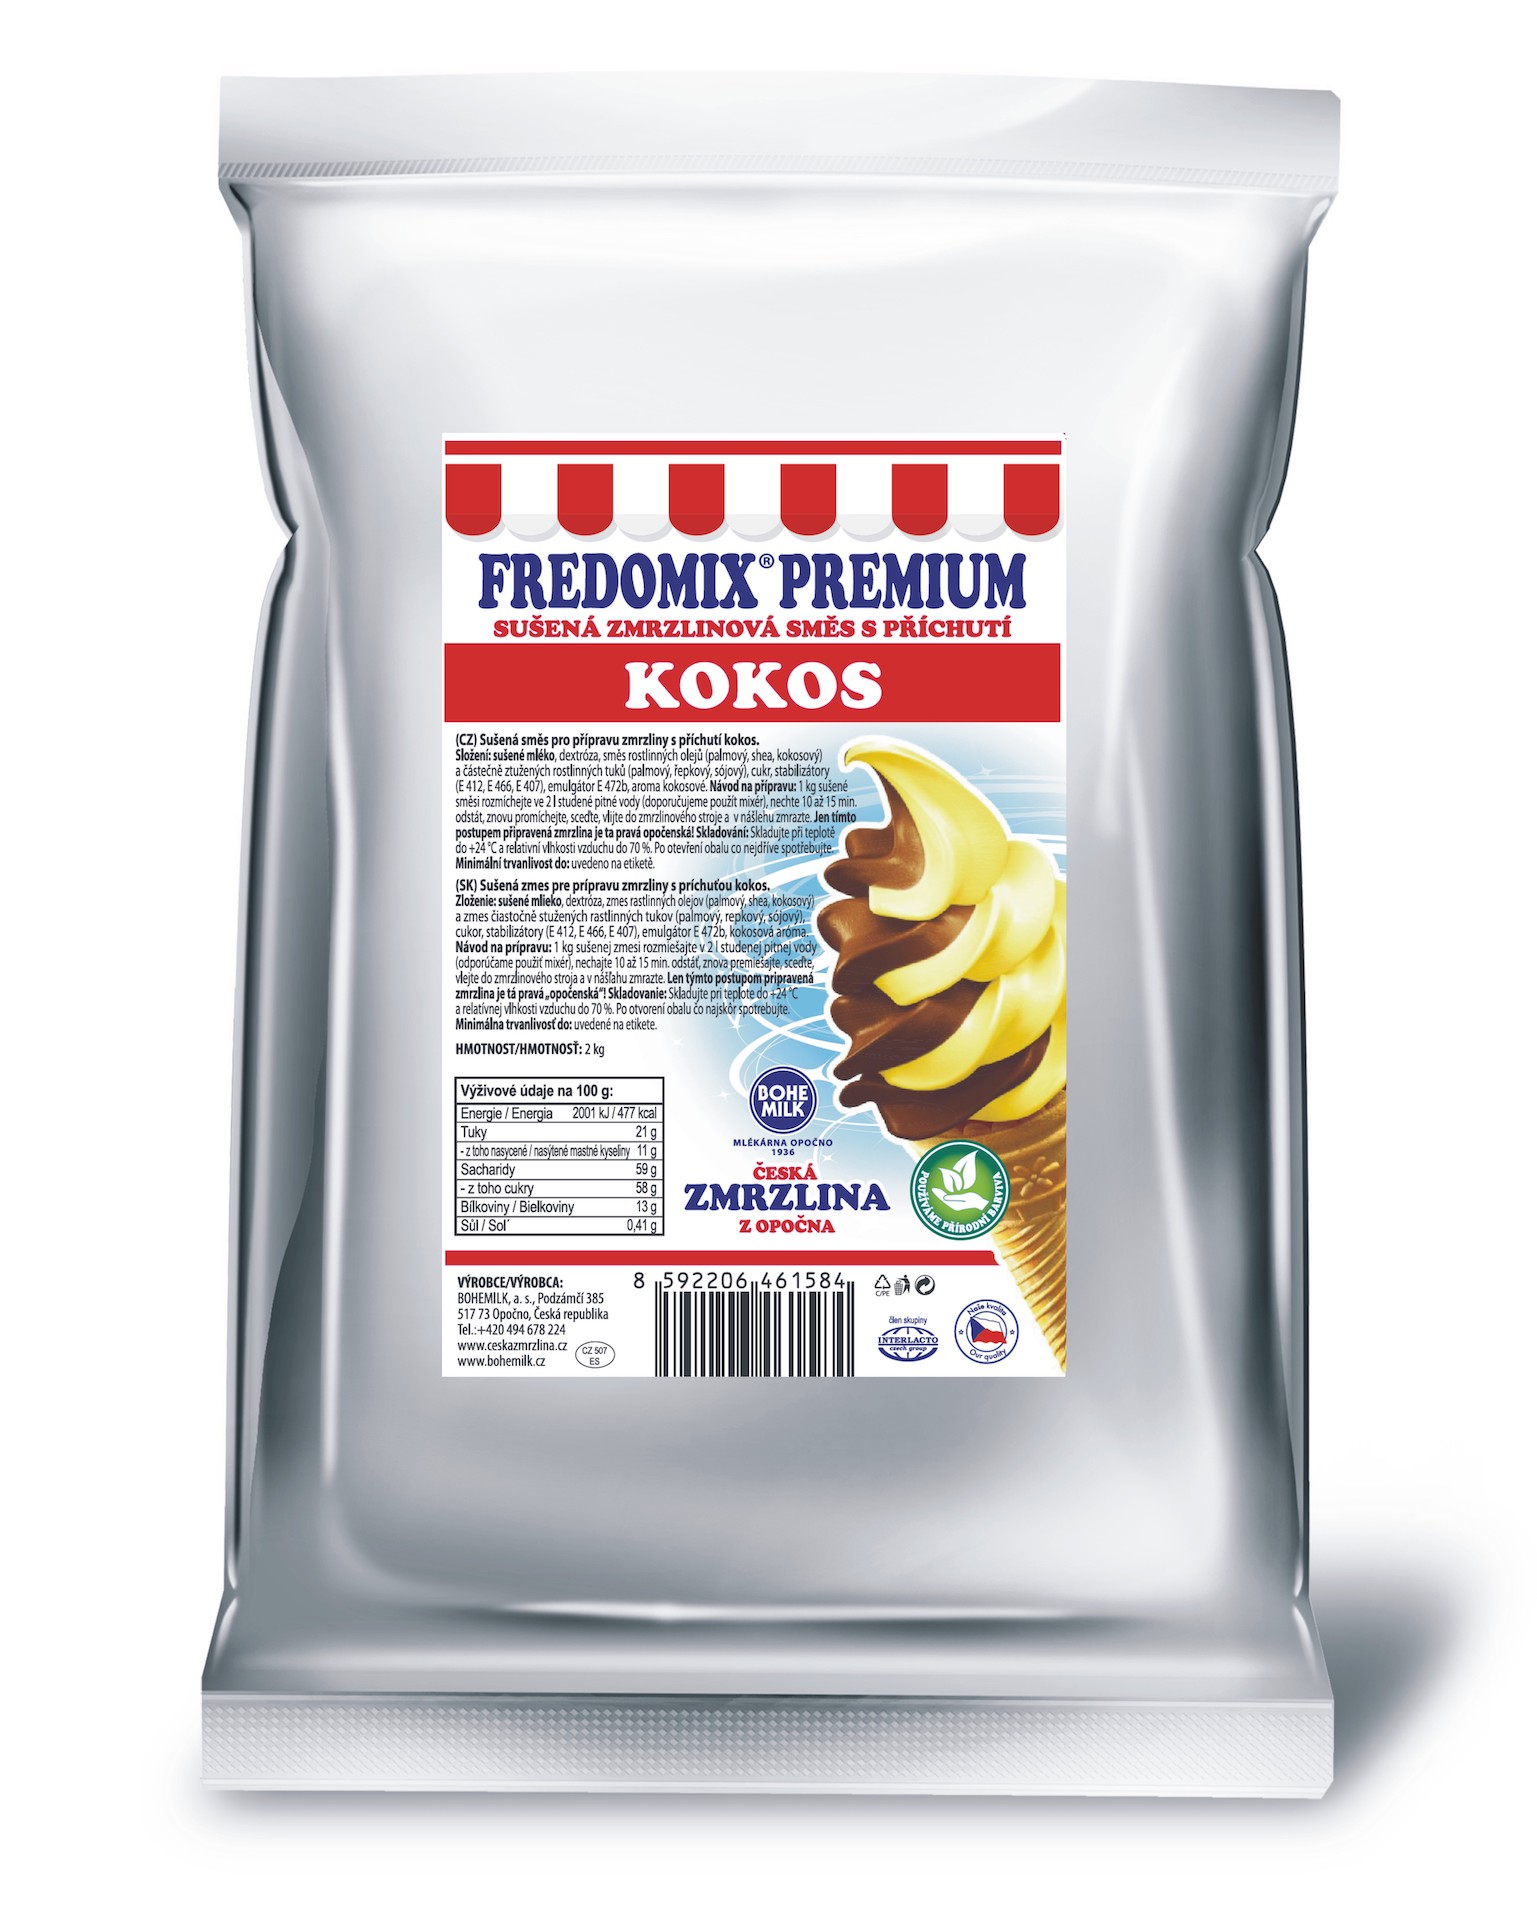 FREDOMIX PREMIUM Kokos, 2kg